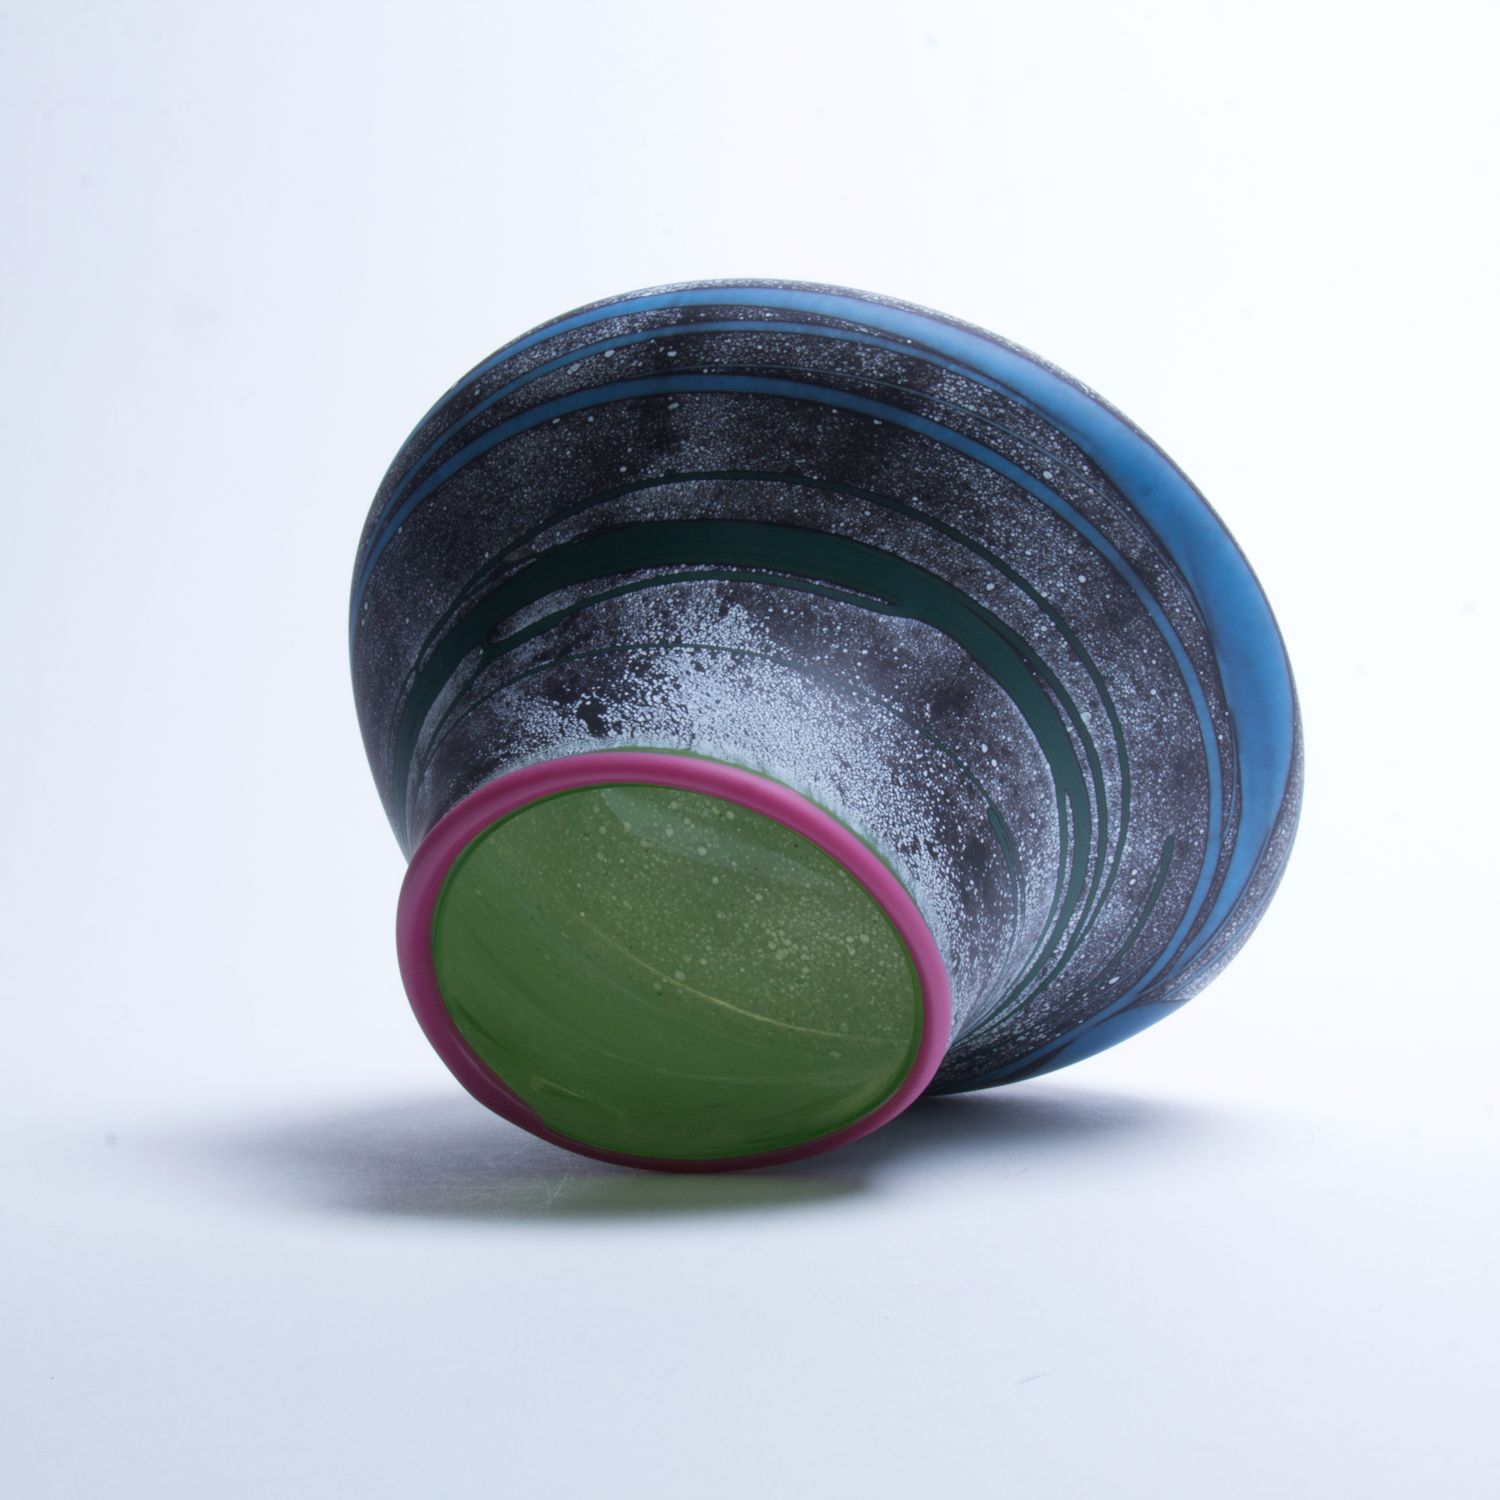 Nadira Narine: Pink Green Woven Basket Product Image 4 of 4